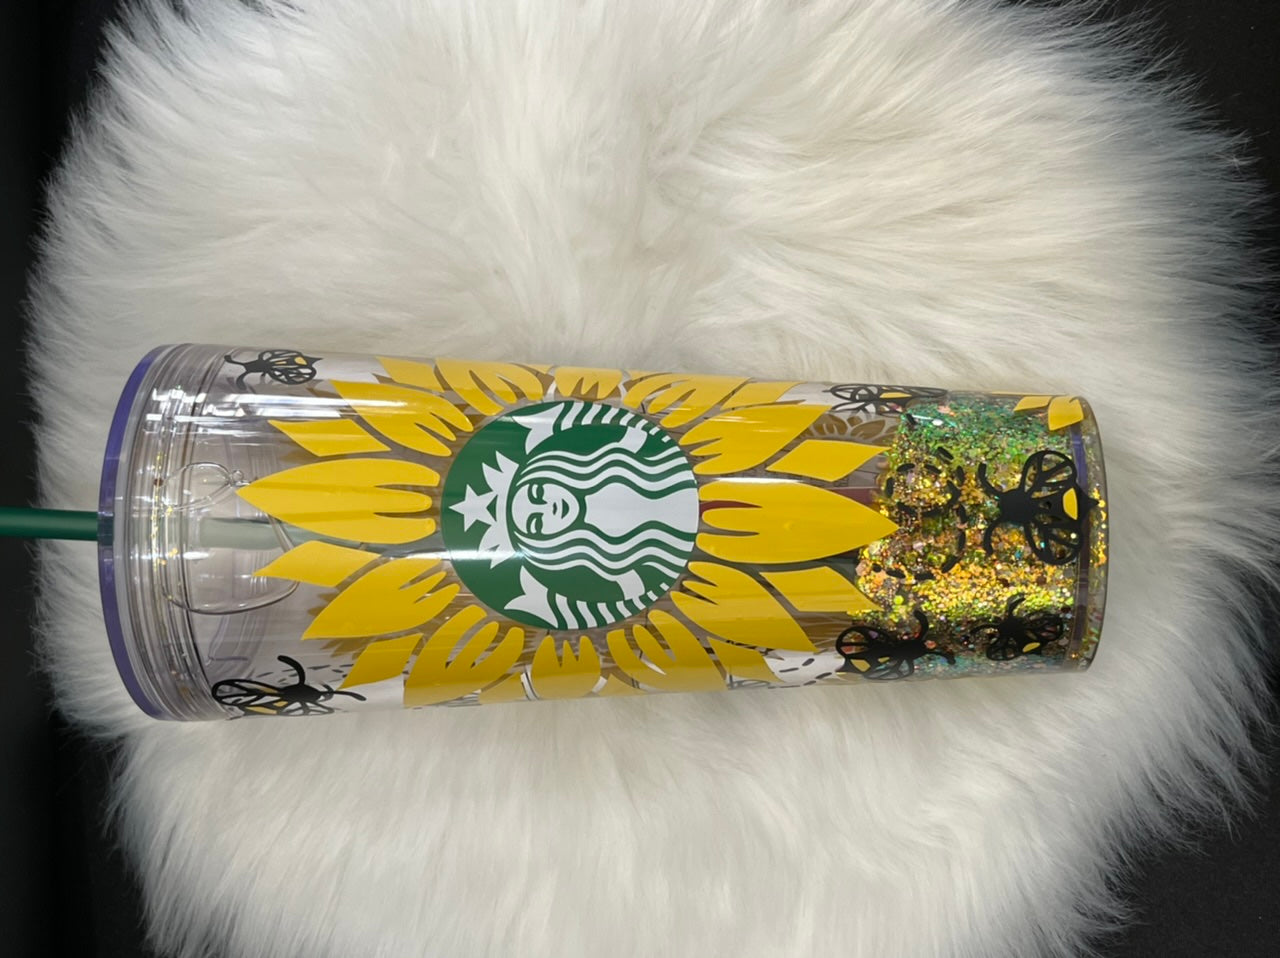 Snowglobe Starbucks Cups 💁🏻‍♀️💕 #foryoupage #foryou #customizedtumb